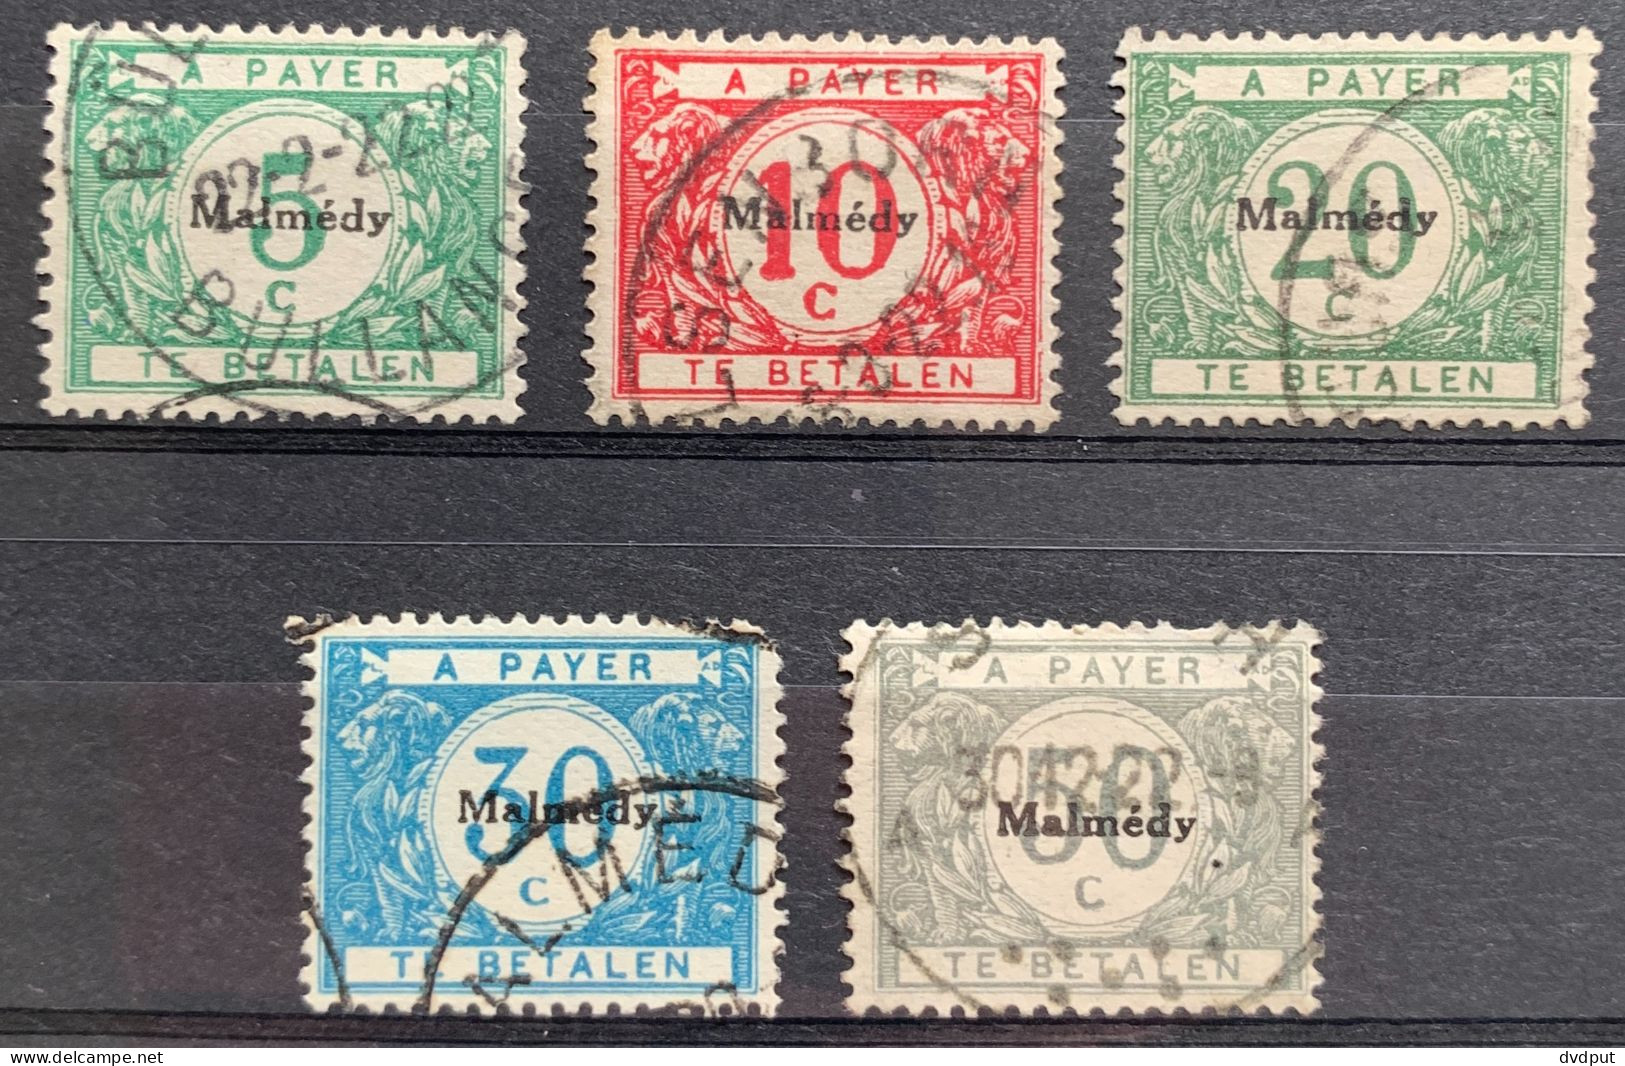 België, 1920, OC79/83, Gestempeld, OBP 55€ - OC55/105 Eupen & Malmédy